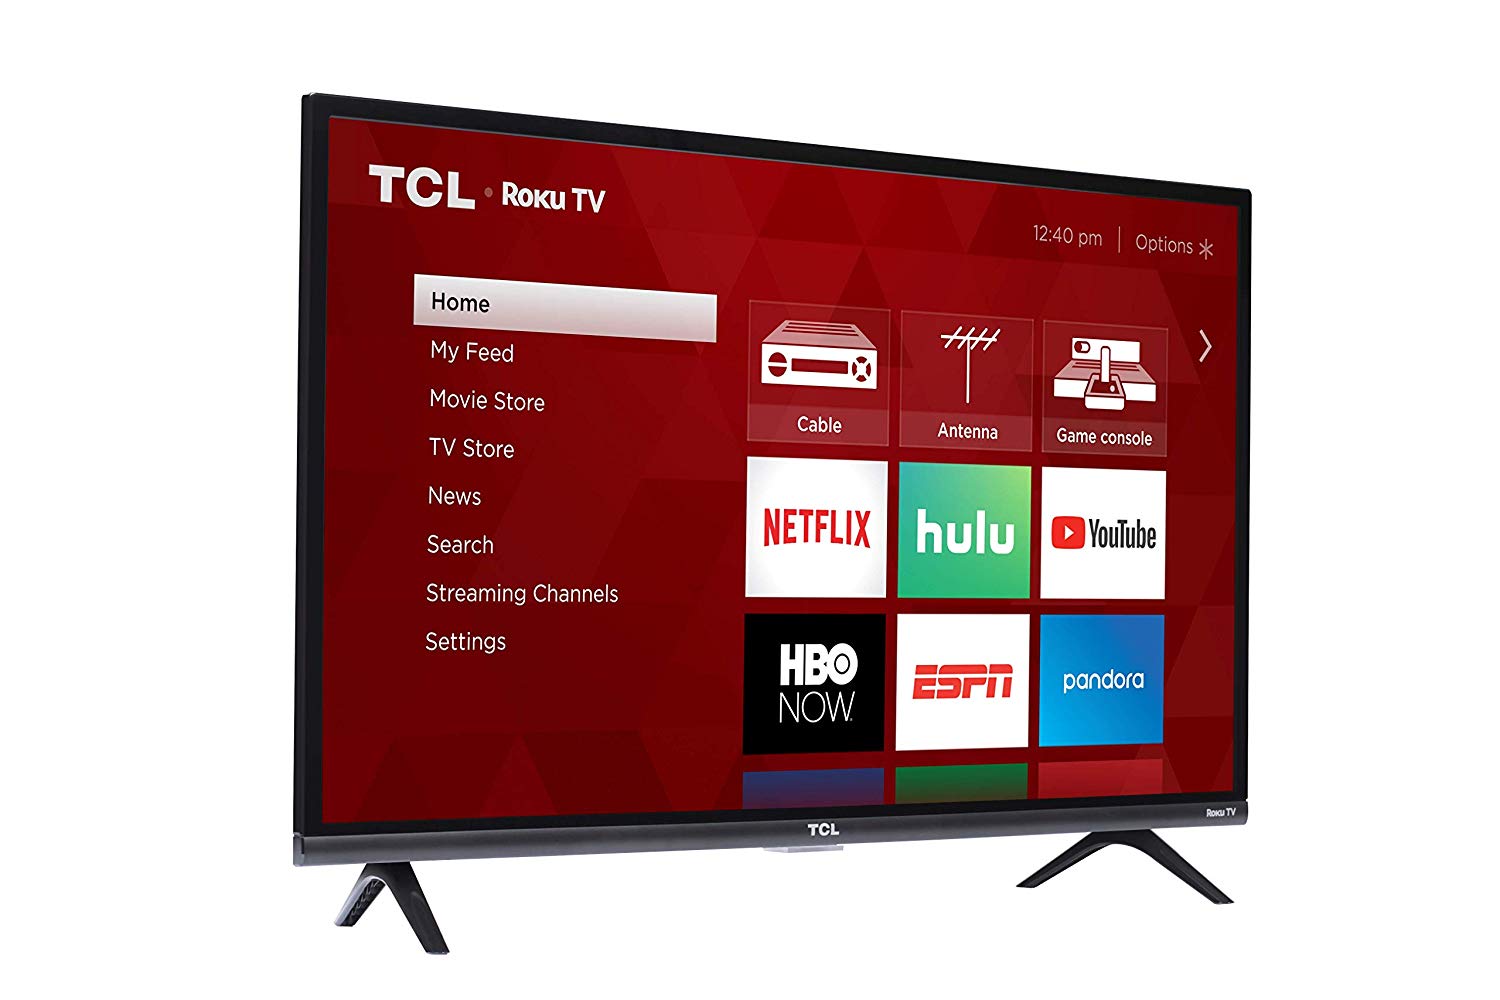 TCL 32S327 32” SMART TV